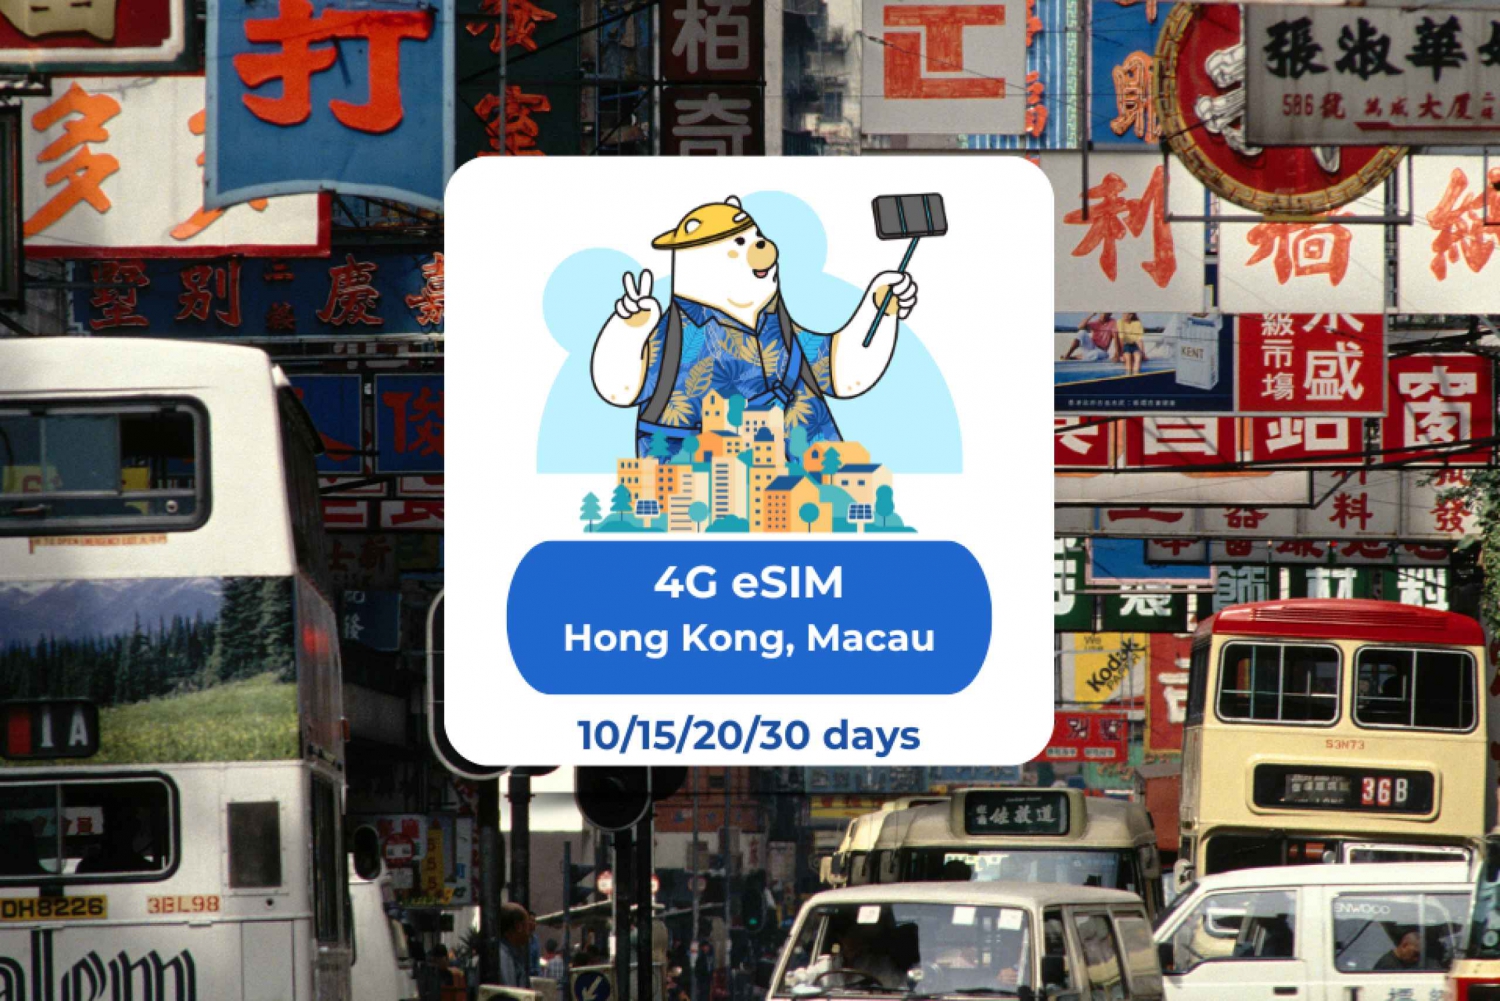 Hong Kong - Macao: Pacchetti dati Esim per 10/15/20/30 giorni